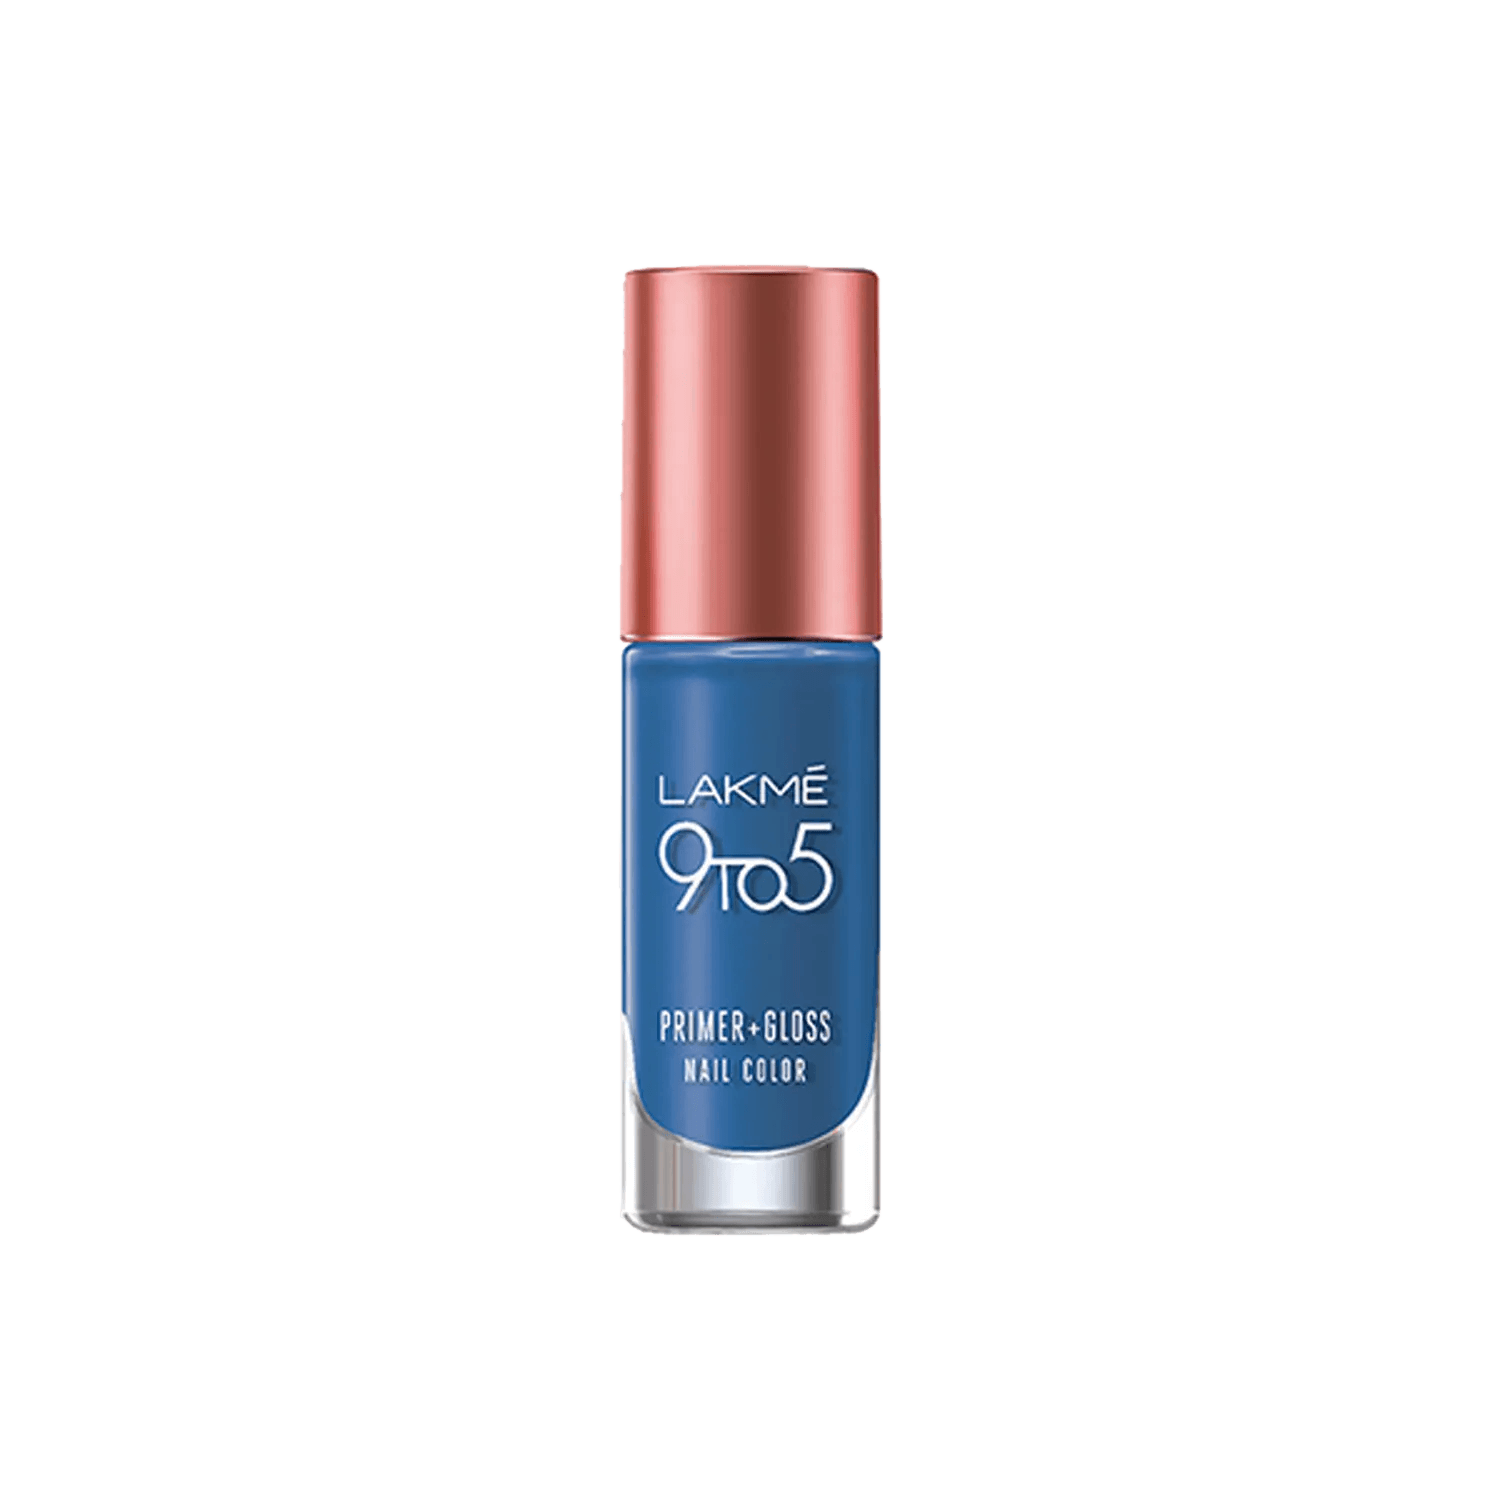 Lakme | Lakme 9To5 Primer + Gloss Nail Color - Indigo Ink (6ml)